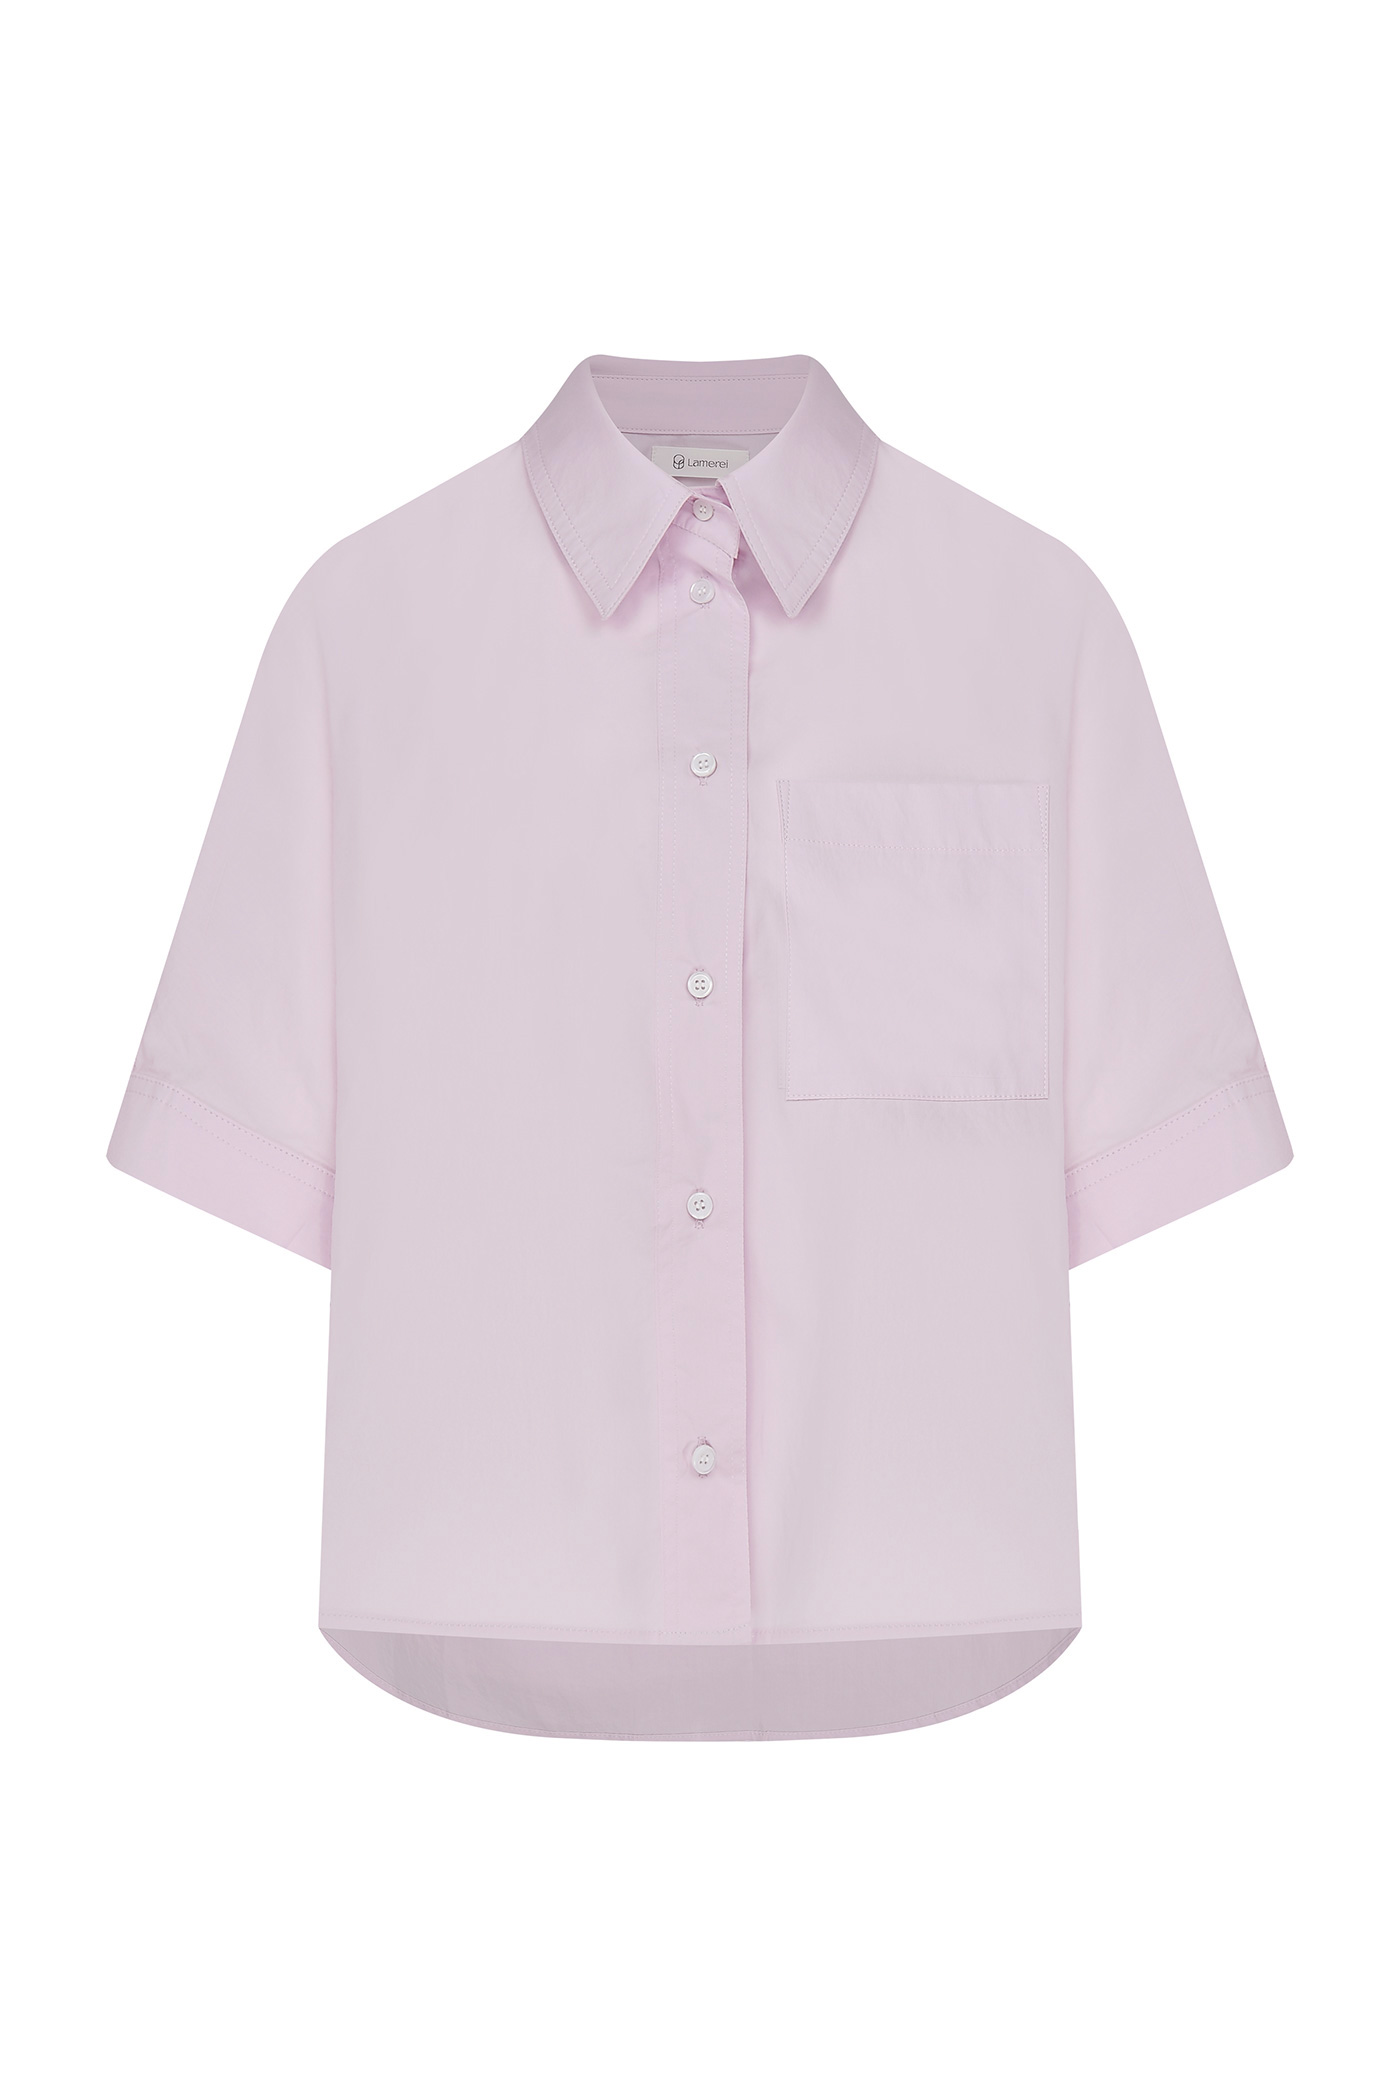 Cotton Placket Shirt-Pink